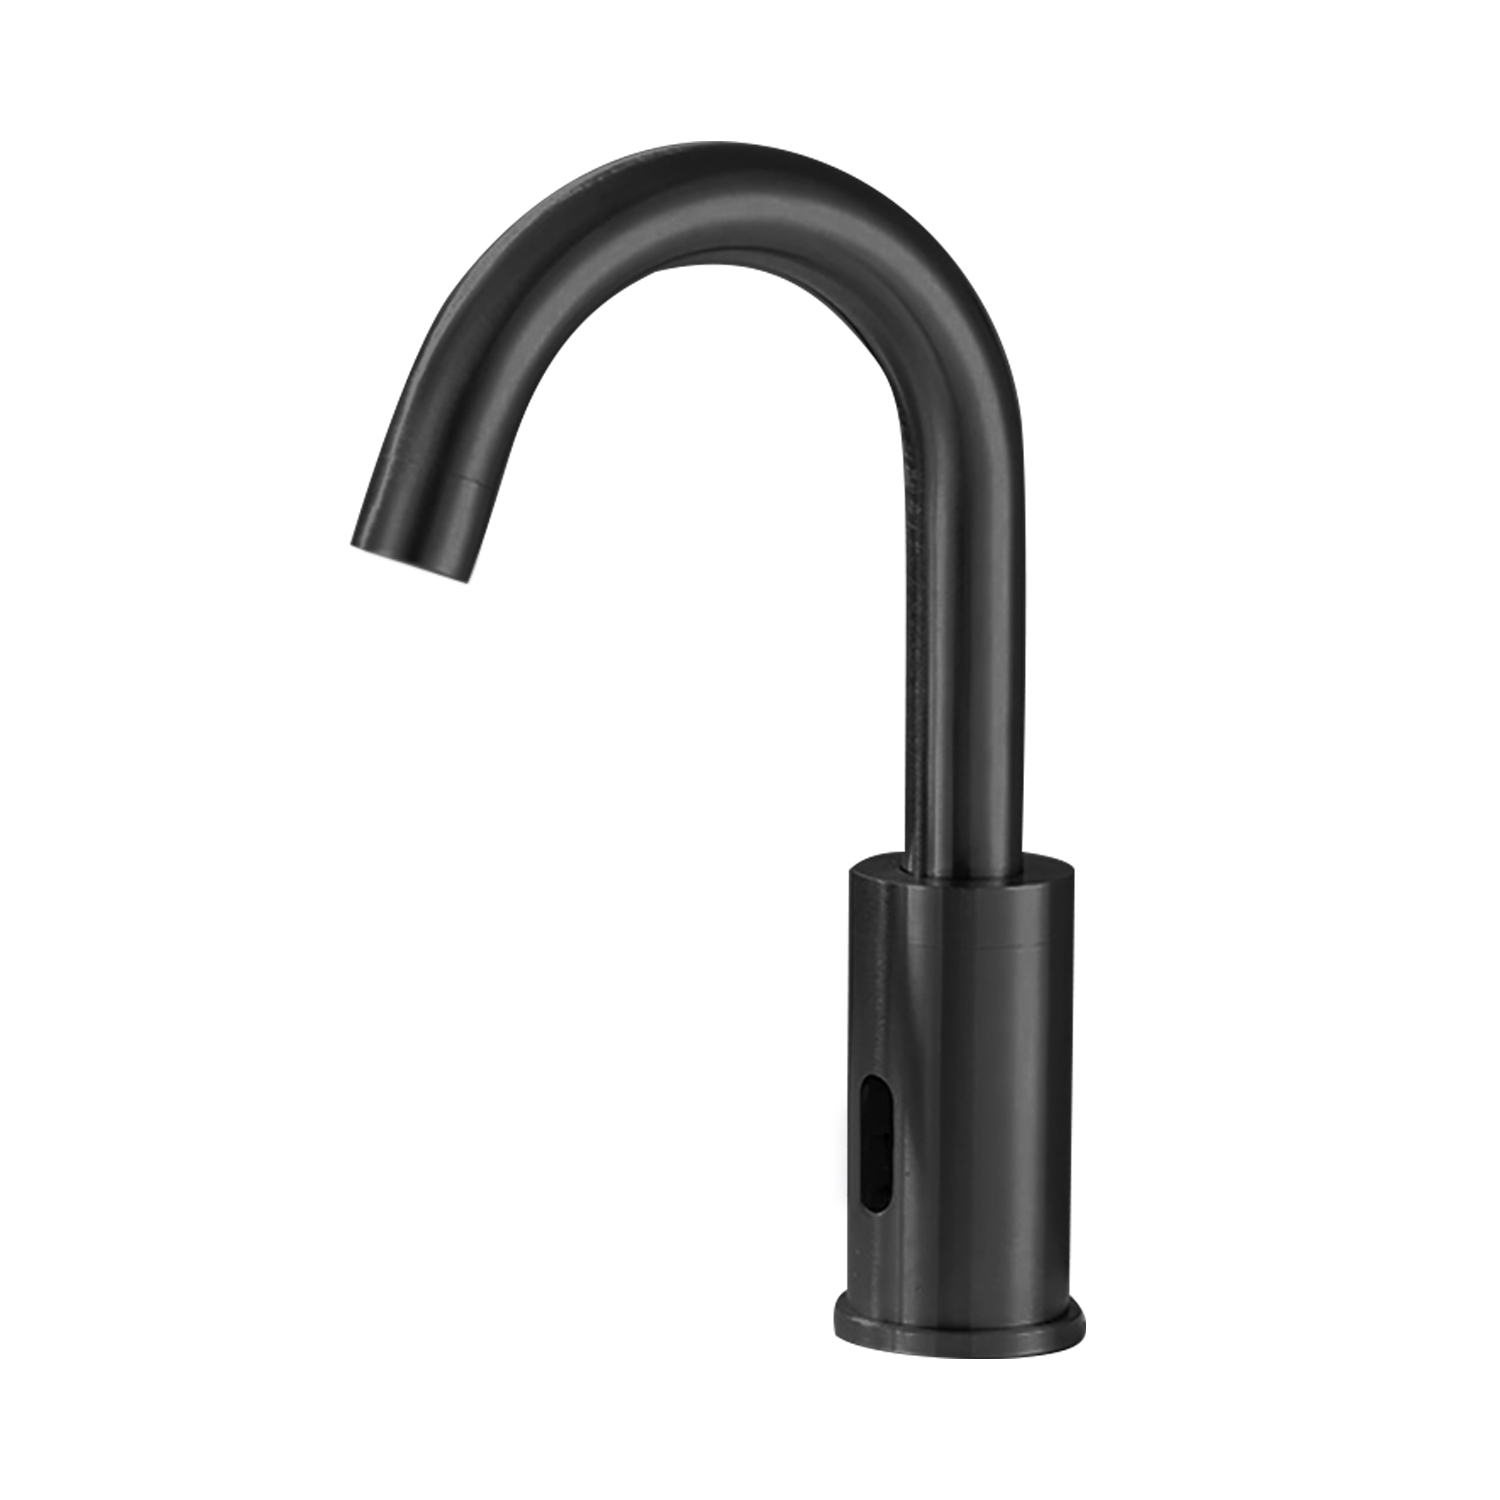 Fontana-Commercial-Dark-ORB-Motion-Sensor-Faucet